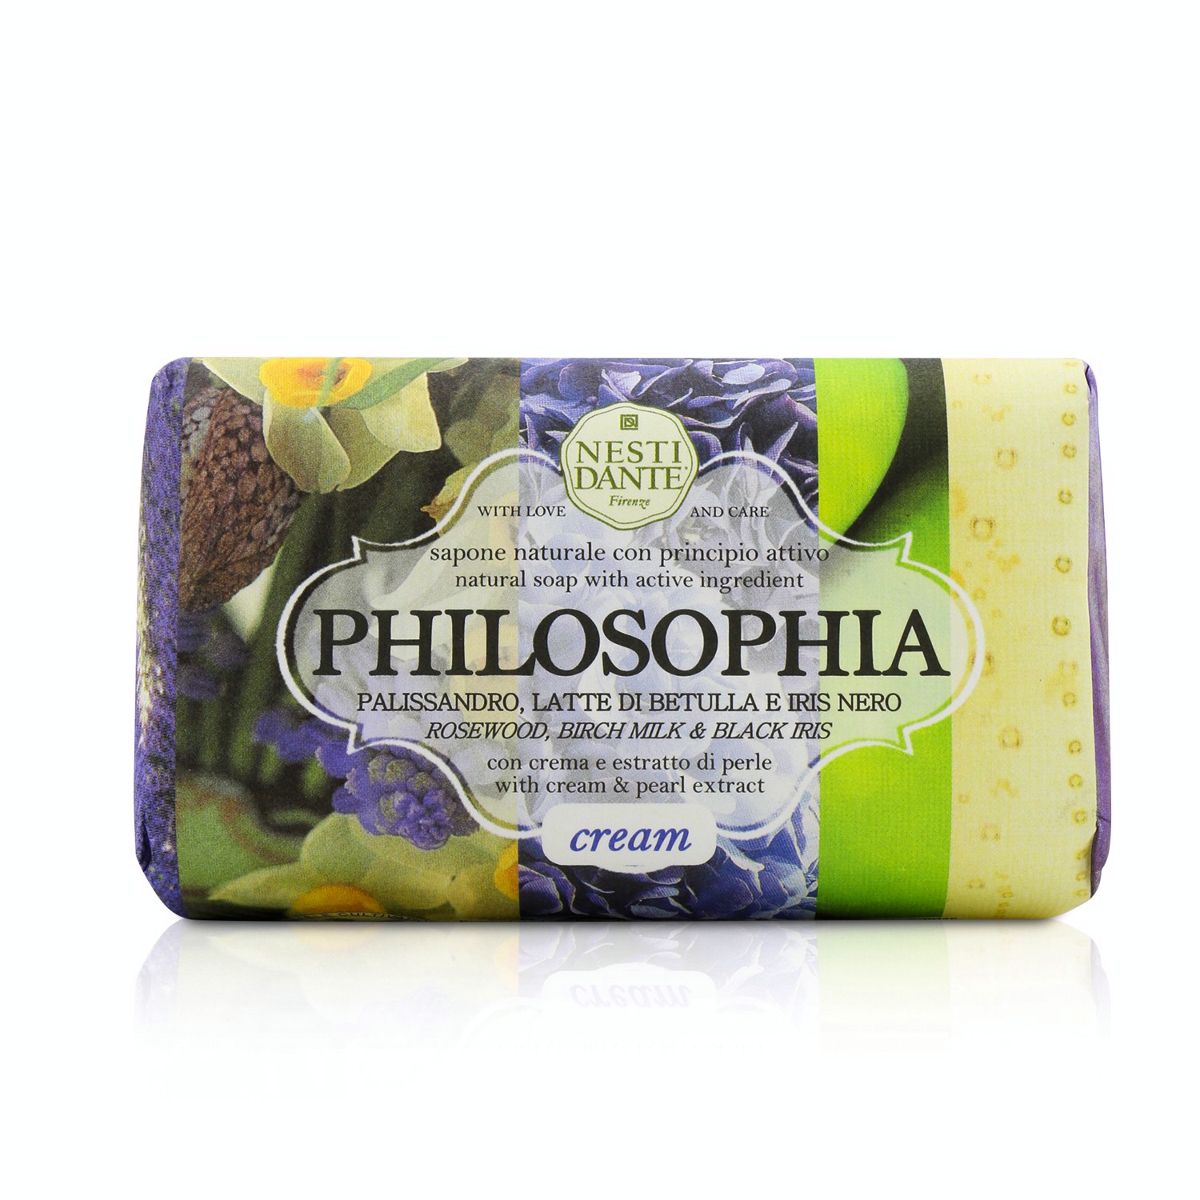 Philosophia Natural Soap - Cream - Rosewood Birch Milk  Black Iris With Cream  Pearl Extract Nesti Dante Image